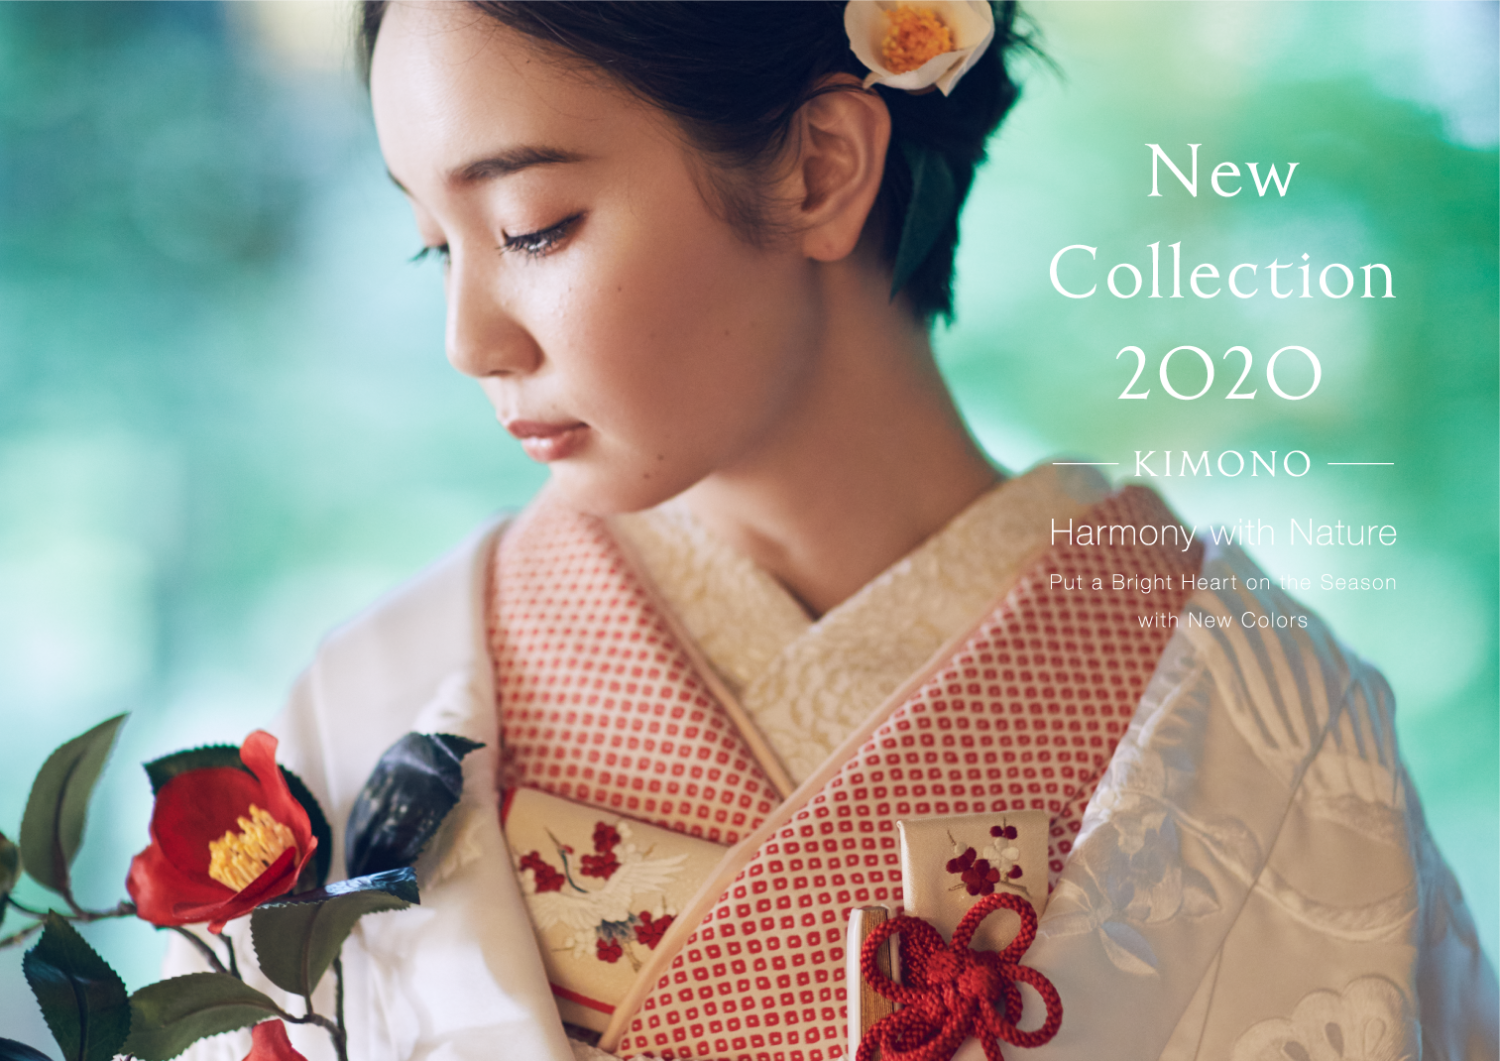 「New Collection 2020 KIMONO」リリースしました。